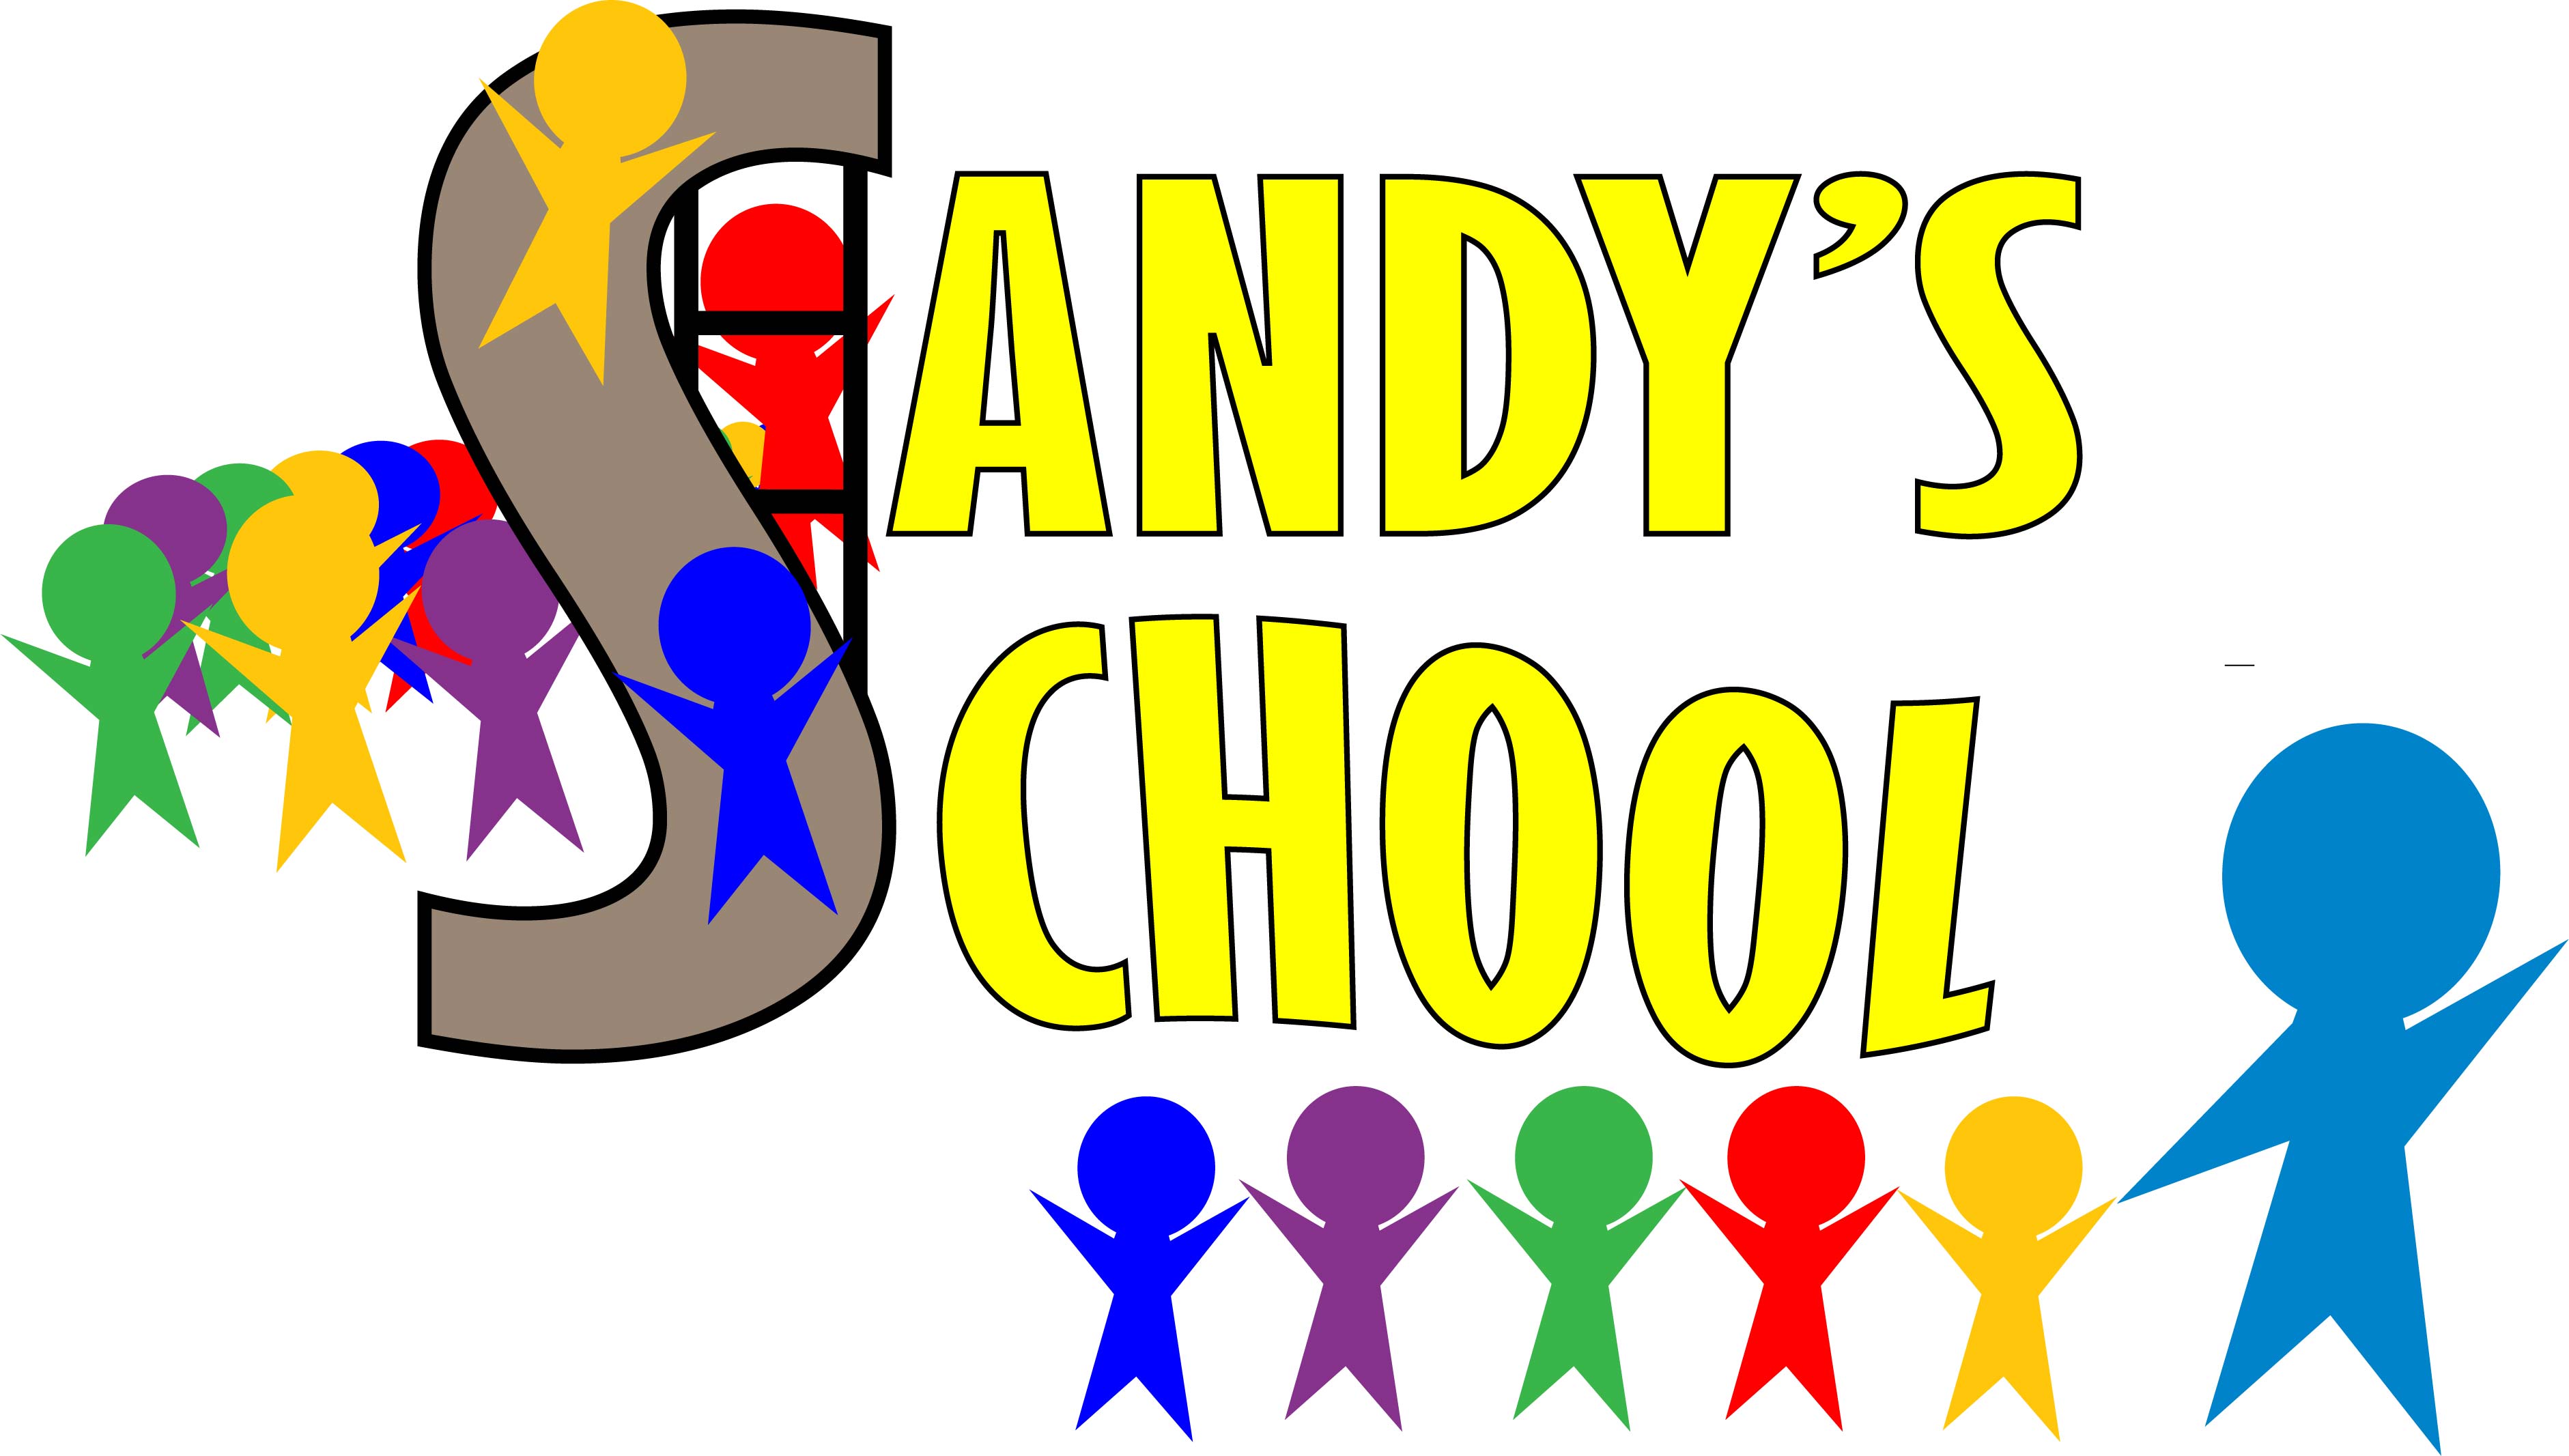 sandy school